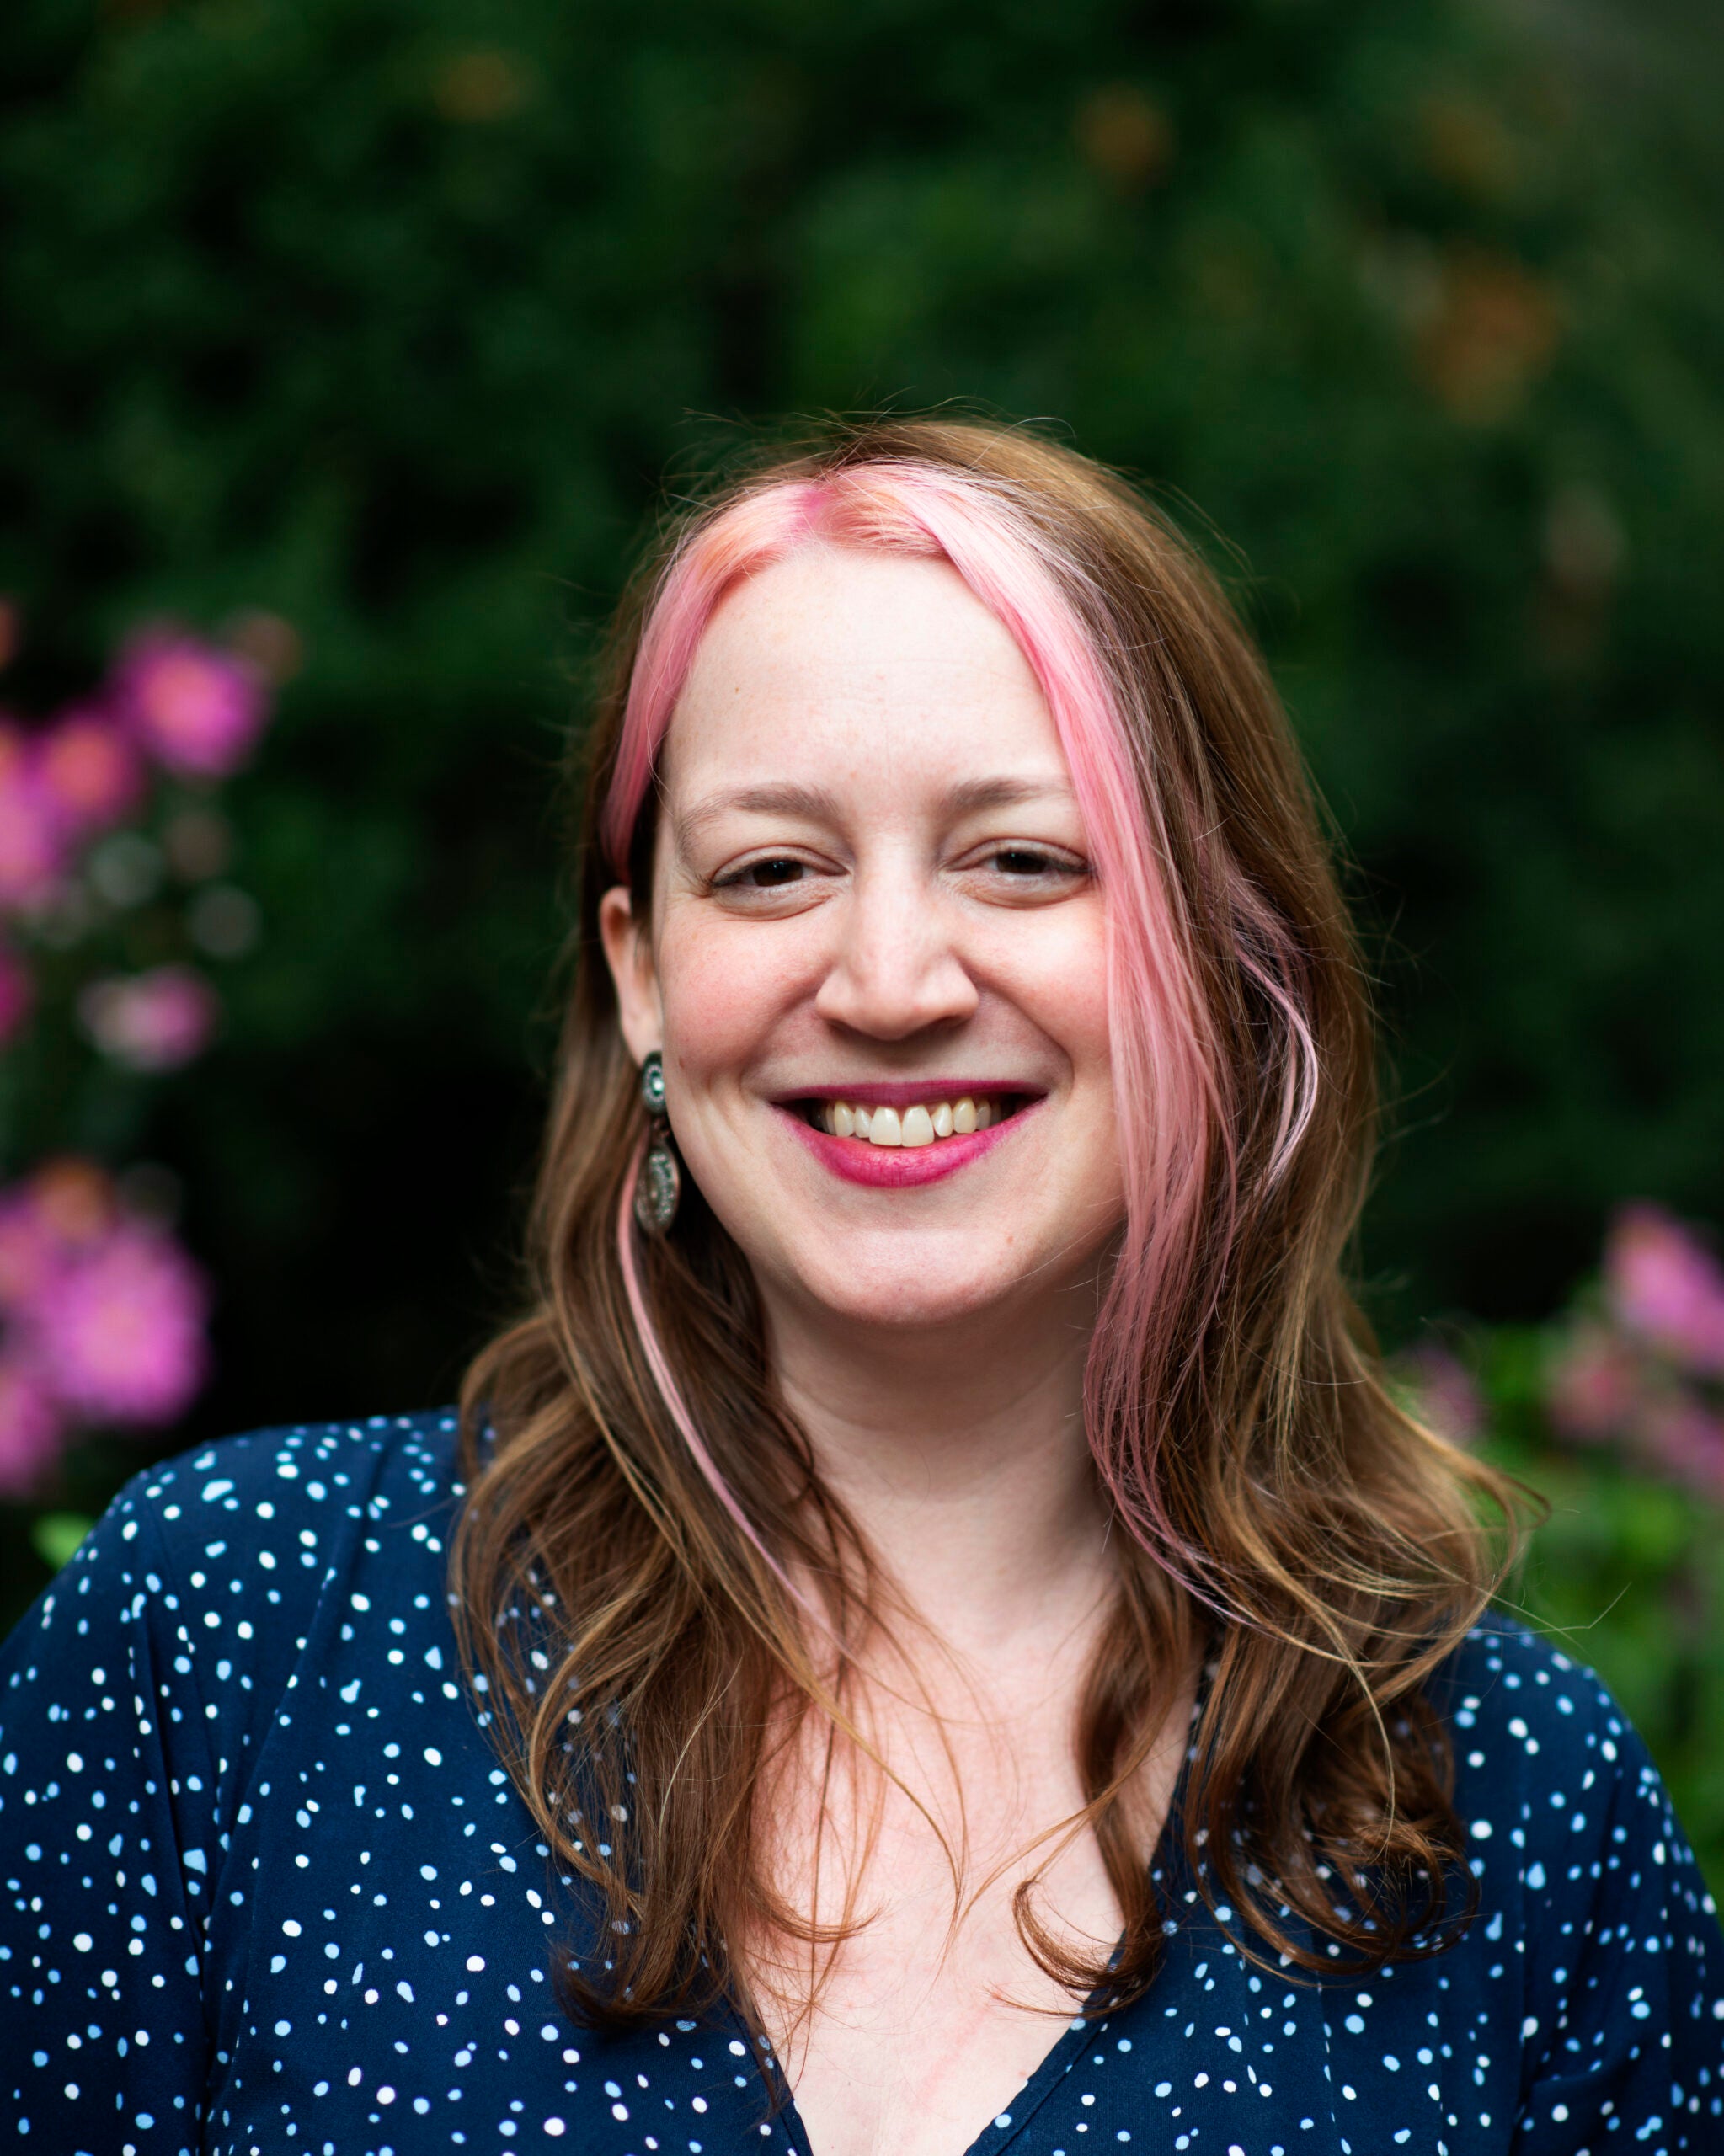 Alison Fairbrother, Associate Editor - Penguin Books